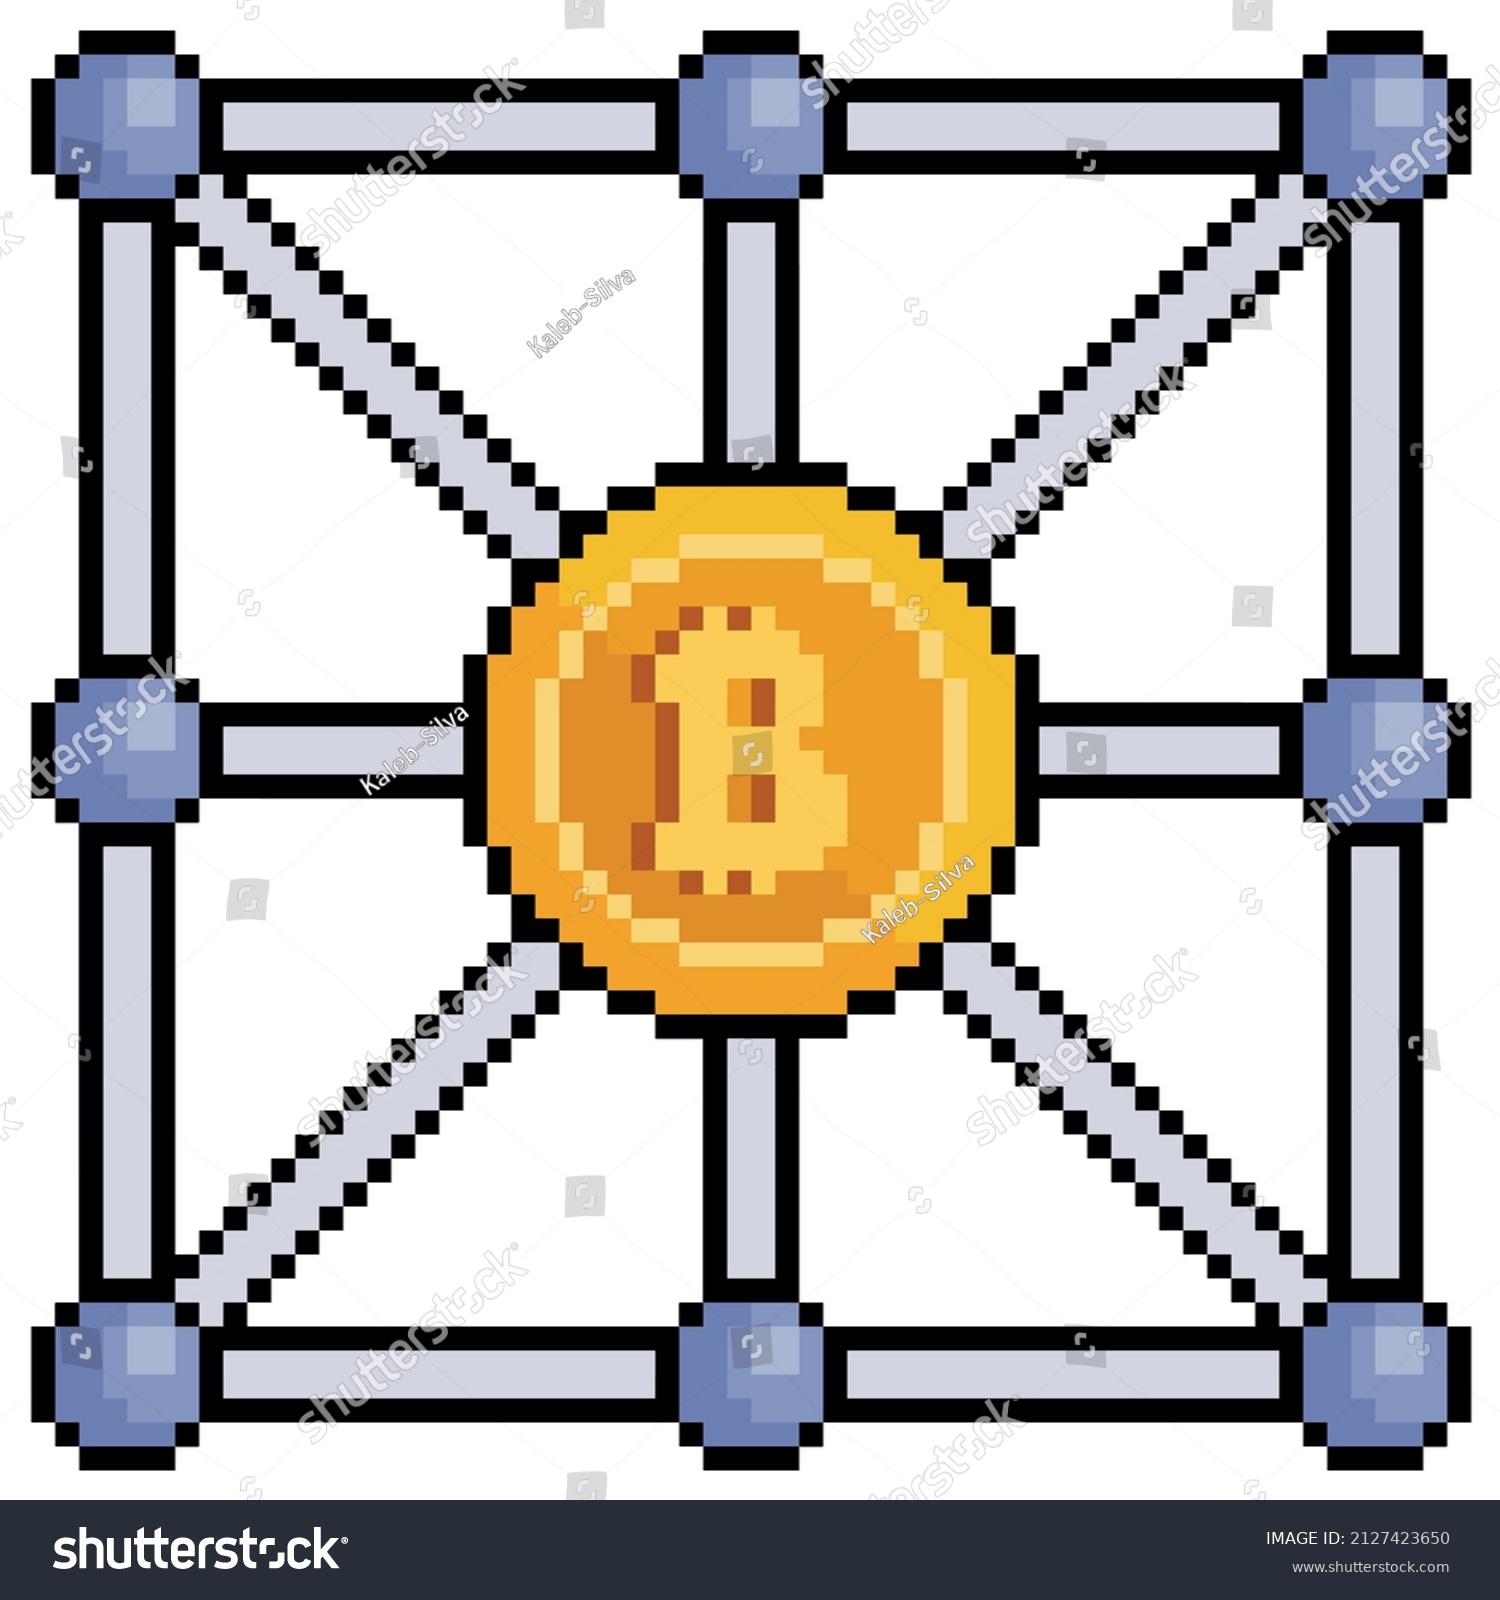 Pixel Art Bitcoin Network Vector Icon Stock Vector Royalty Free Shutterstock